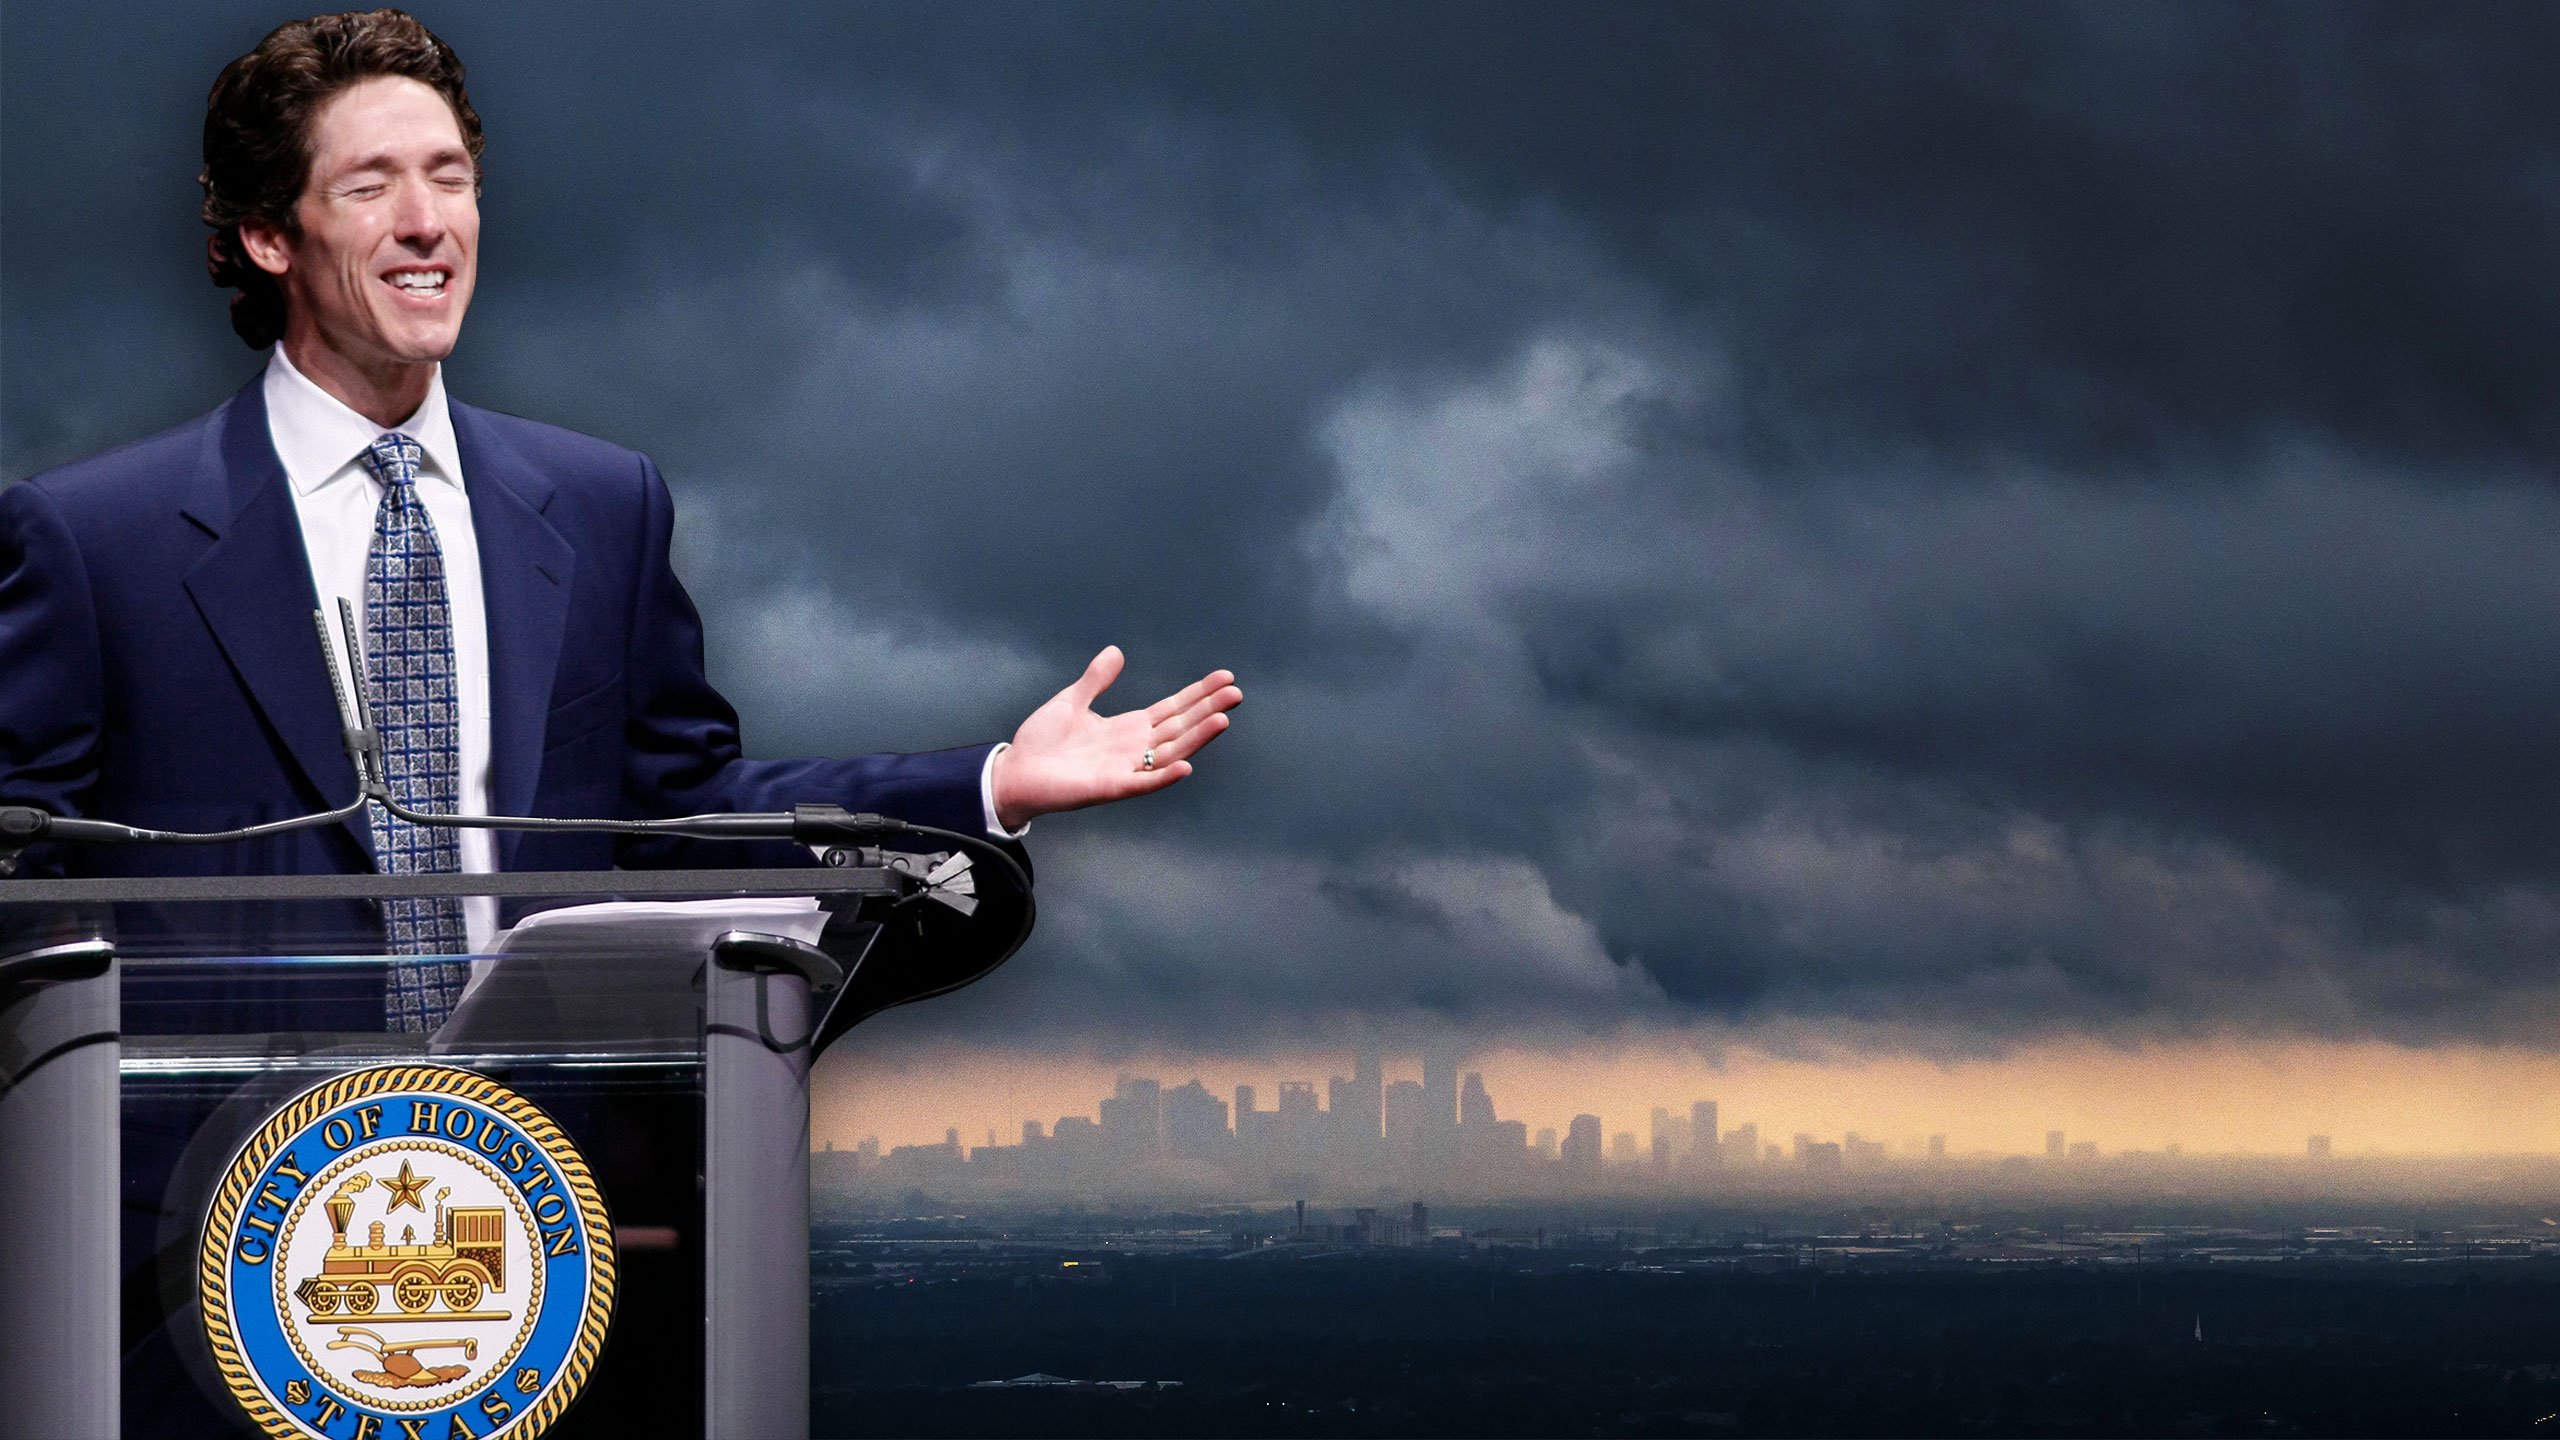 Joel Osteen's 'Prosperity Gospel' Made Him Houston's Hurricane Pariah